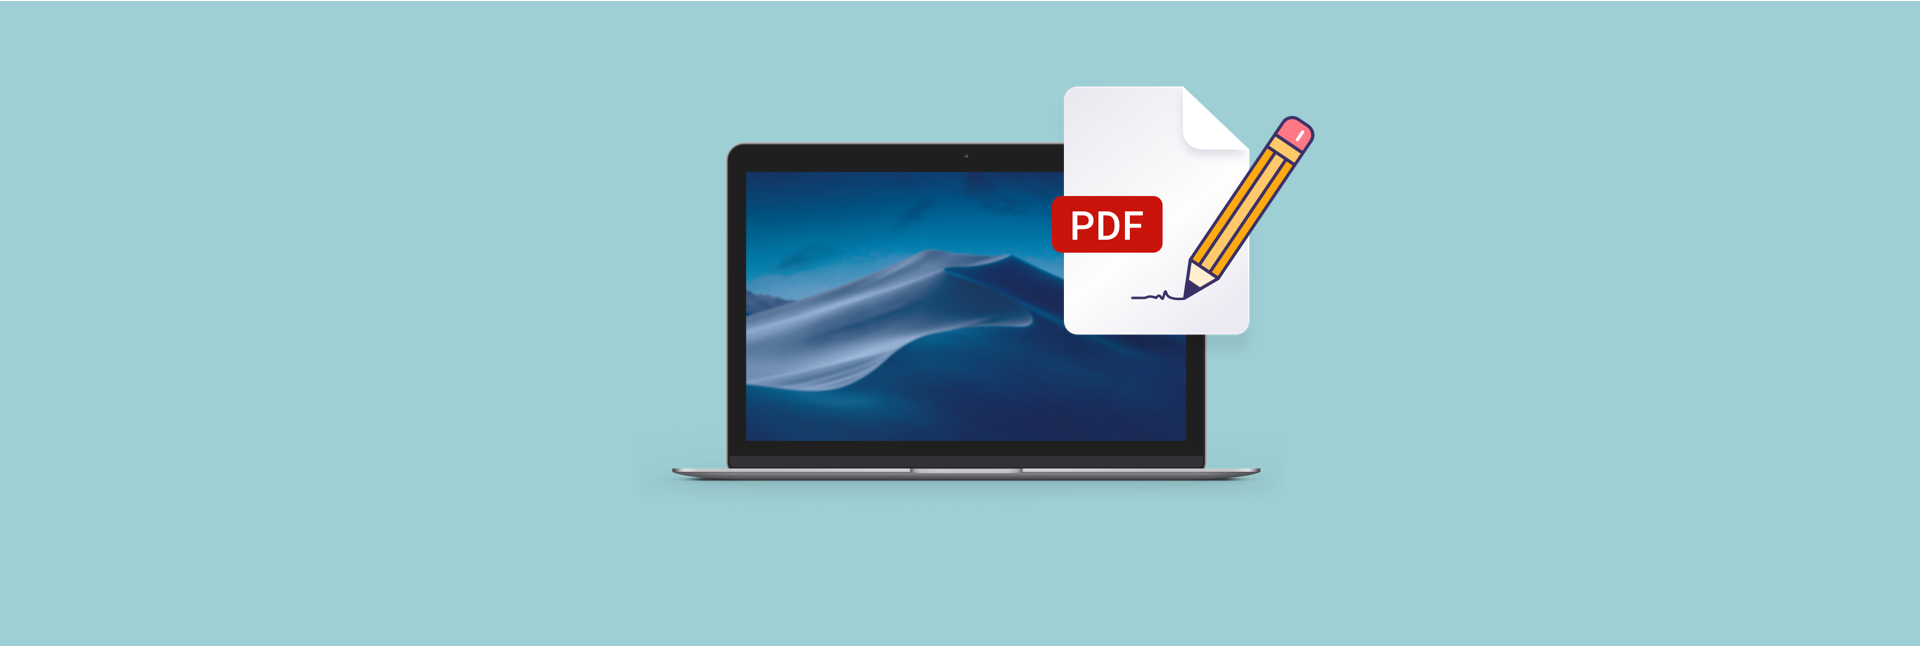 how to turn pdf into jpg on mac